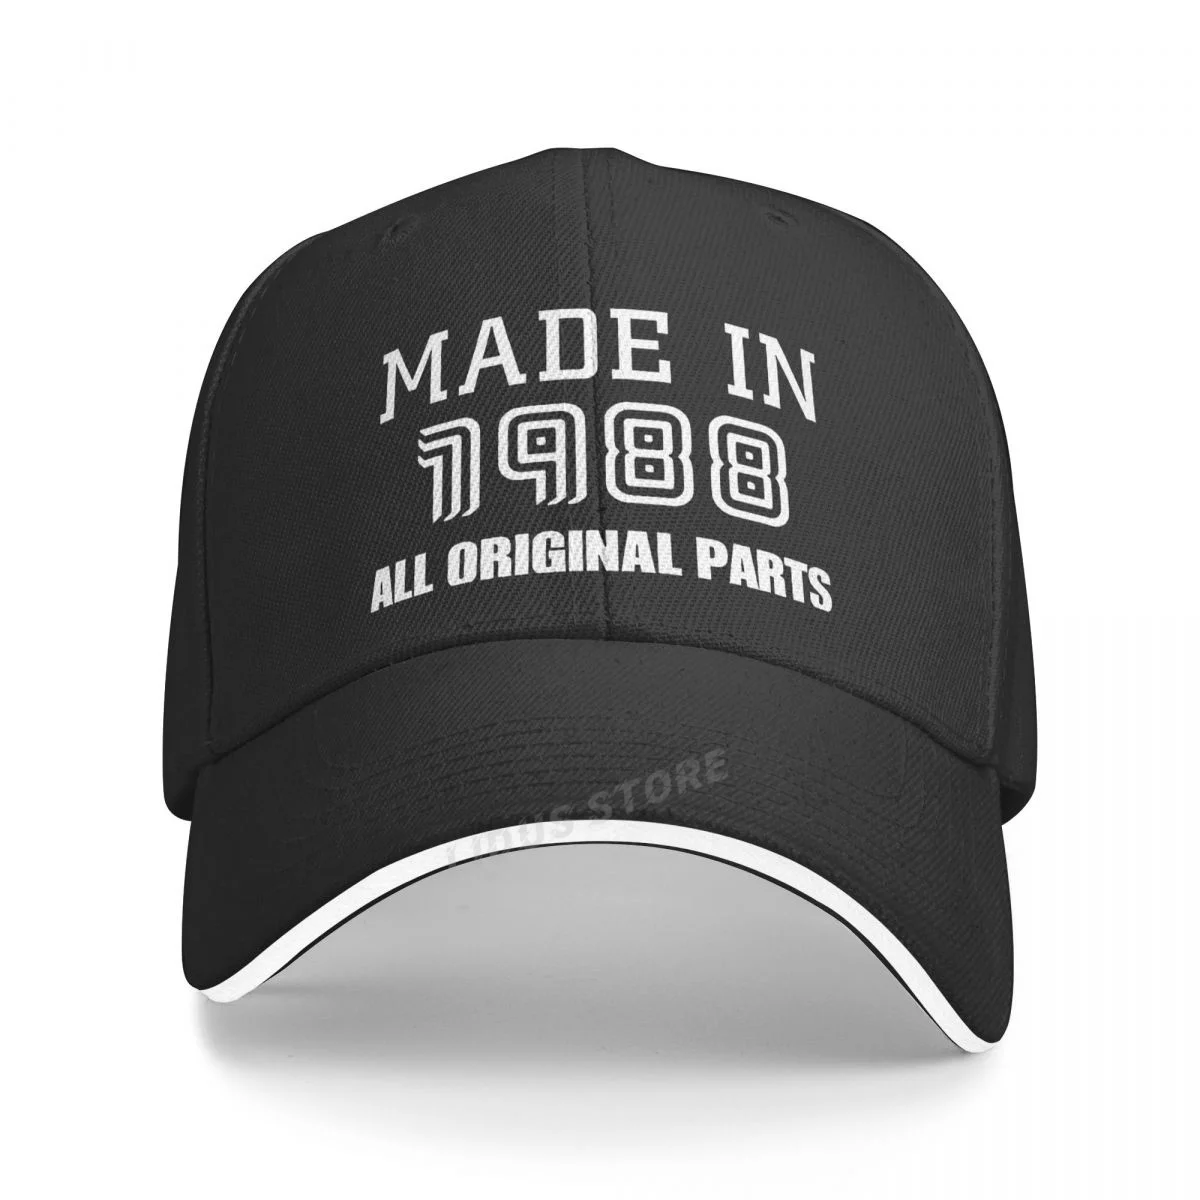 Made In 1988 Caps Birthday Present Baseball Cap Men Cool Unisex Hats